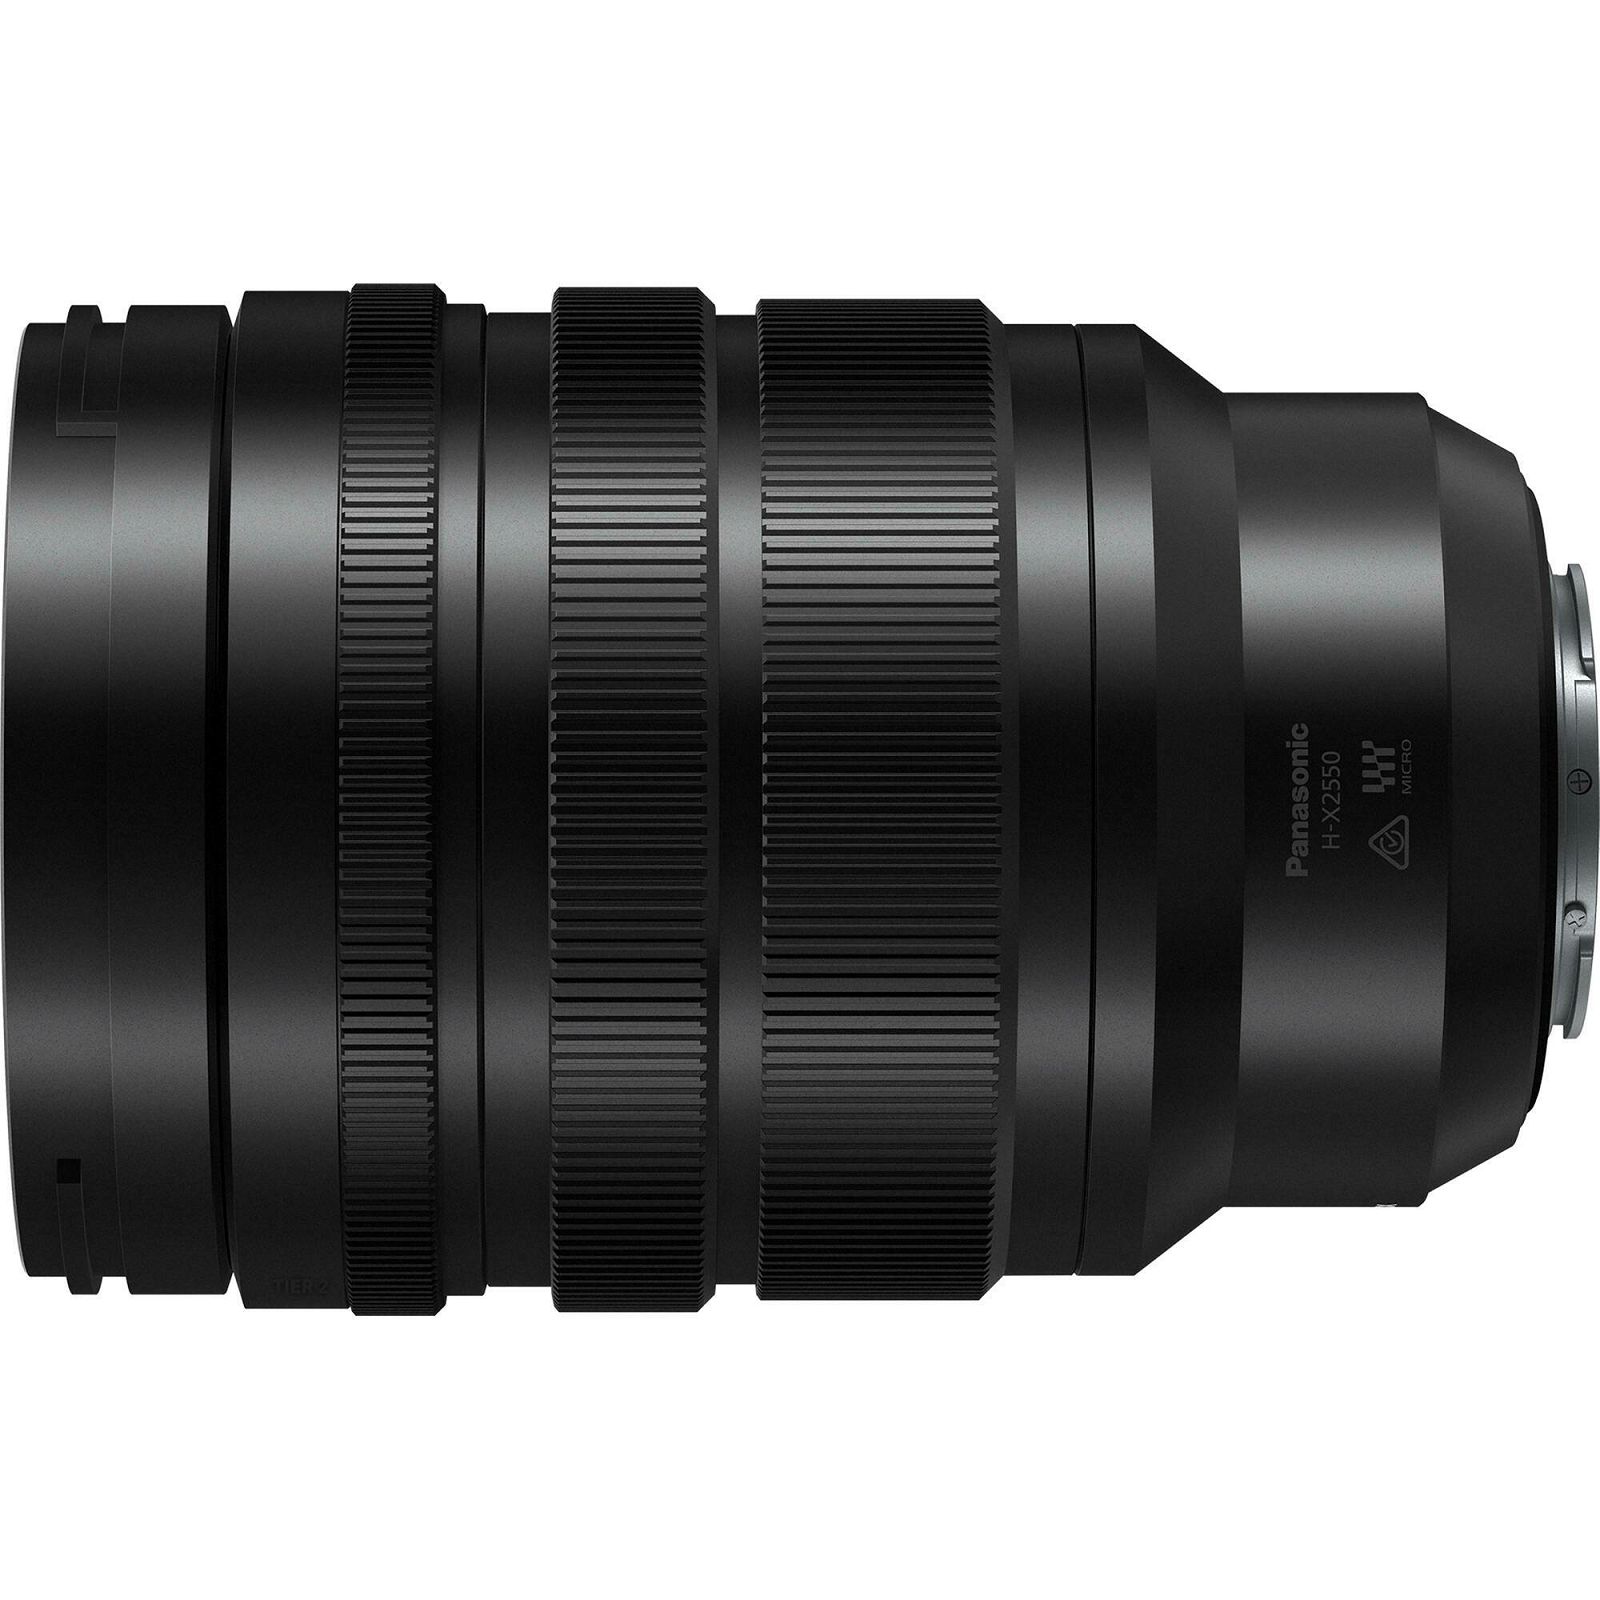 Panasonic 25-50mm f/1.7 Asph Leica DG Vario-Summilux telefoto objektiv za Micro Four Thirds MFT micro4/3" (H-X2550E)